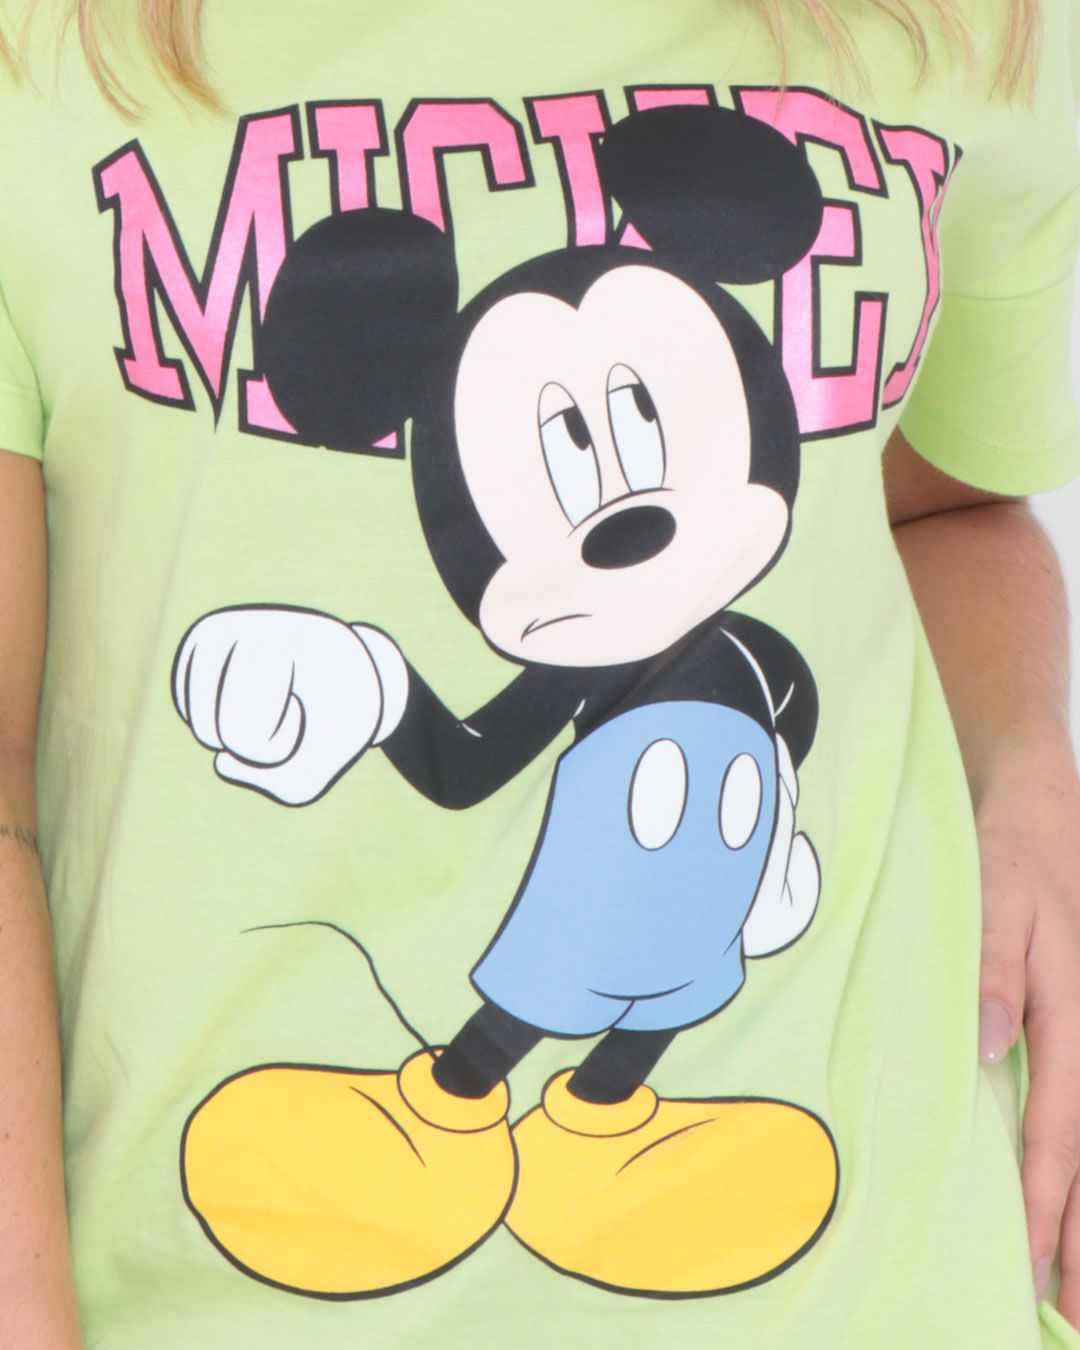 Camiseta-Estampa-Mickey-Mouse-Disney-Verde-Claro